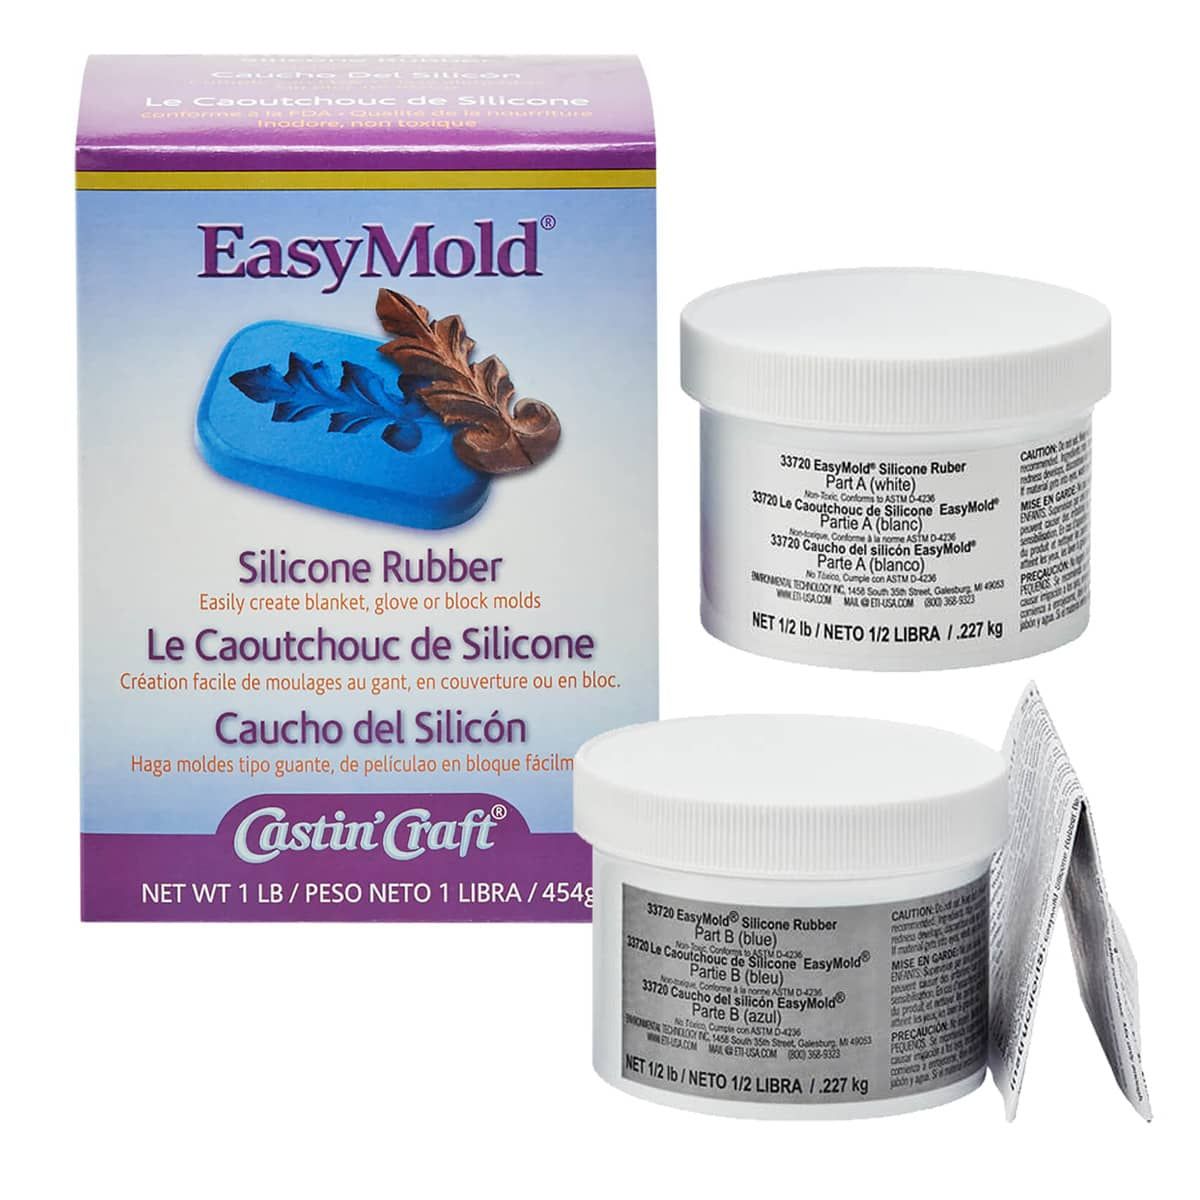 Castin'Craft EasyMold Silicone Rubber, 1 lb. Kit